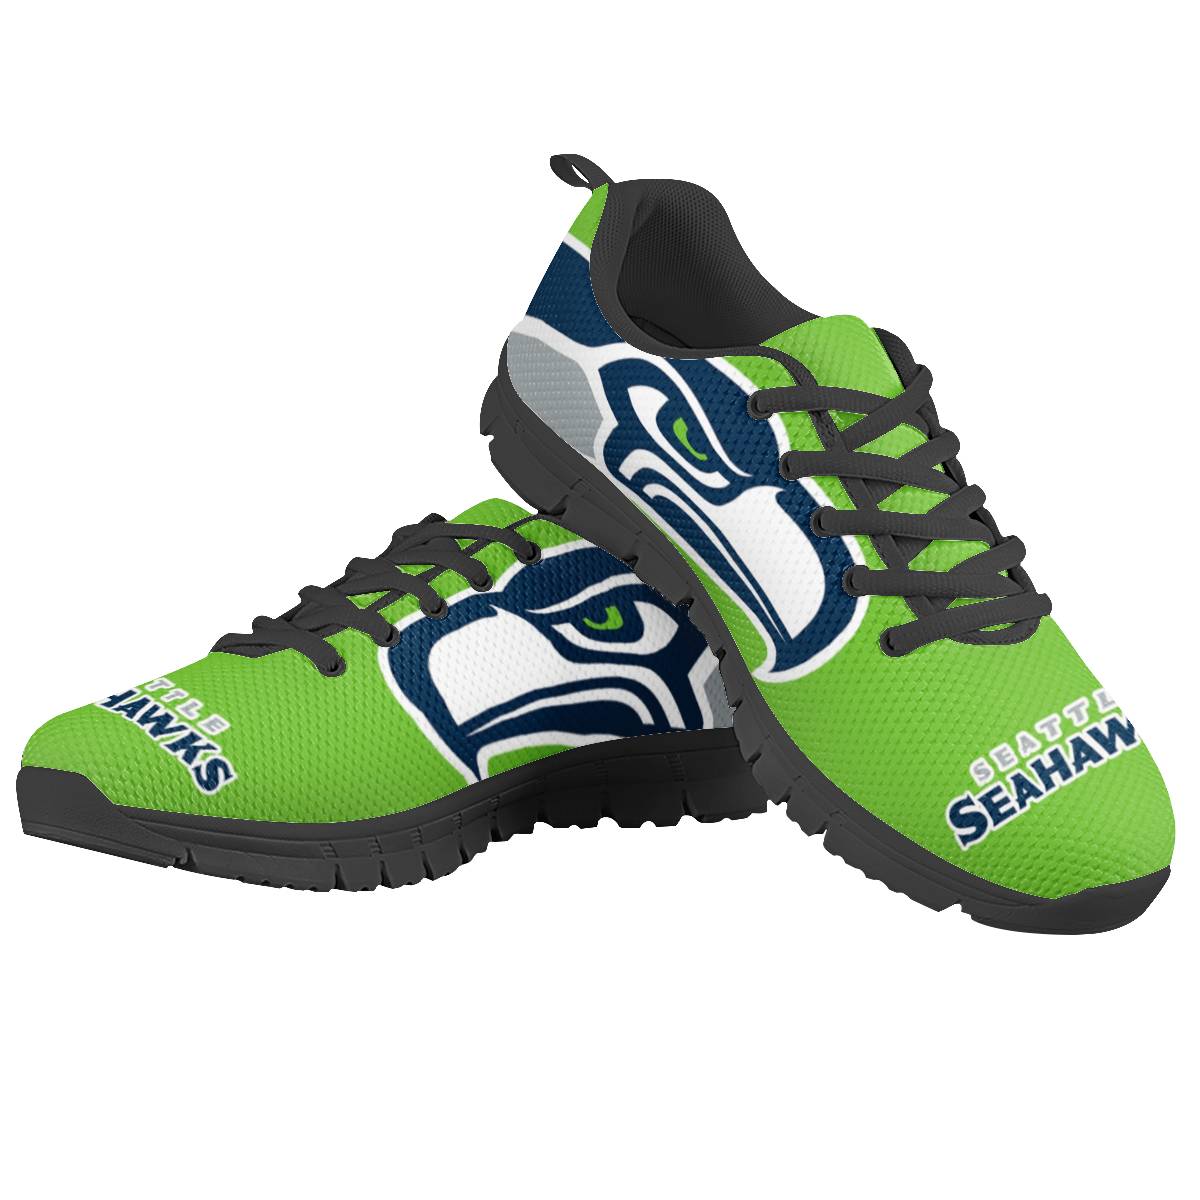 Women's Seattle Seahawks AQ Running Shoes 002